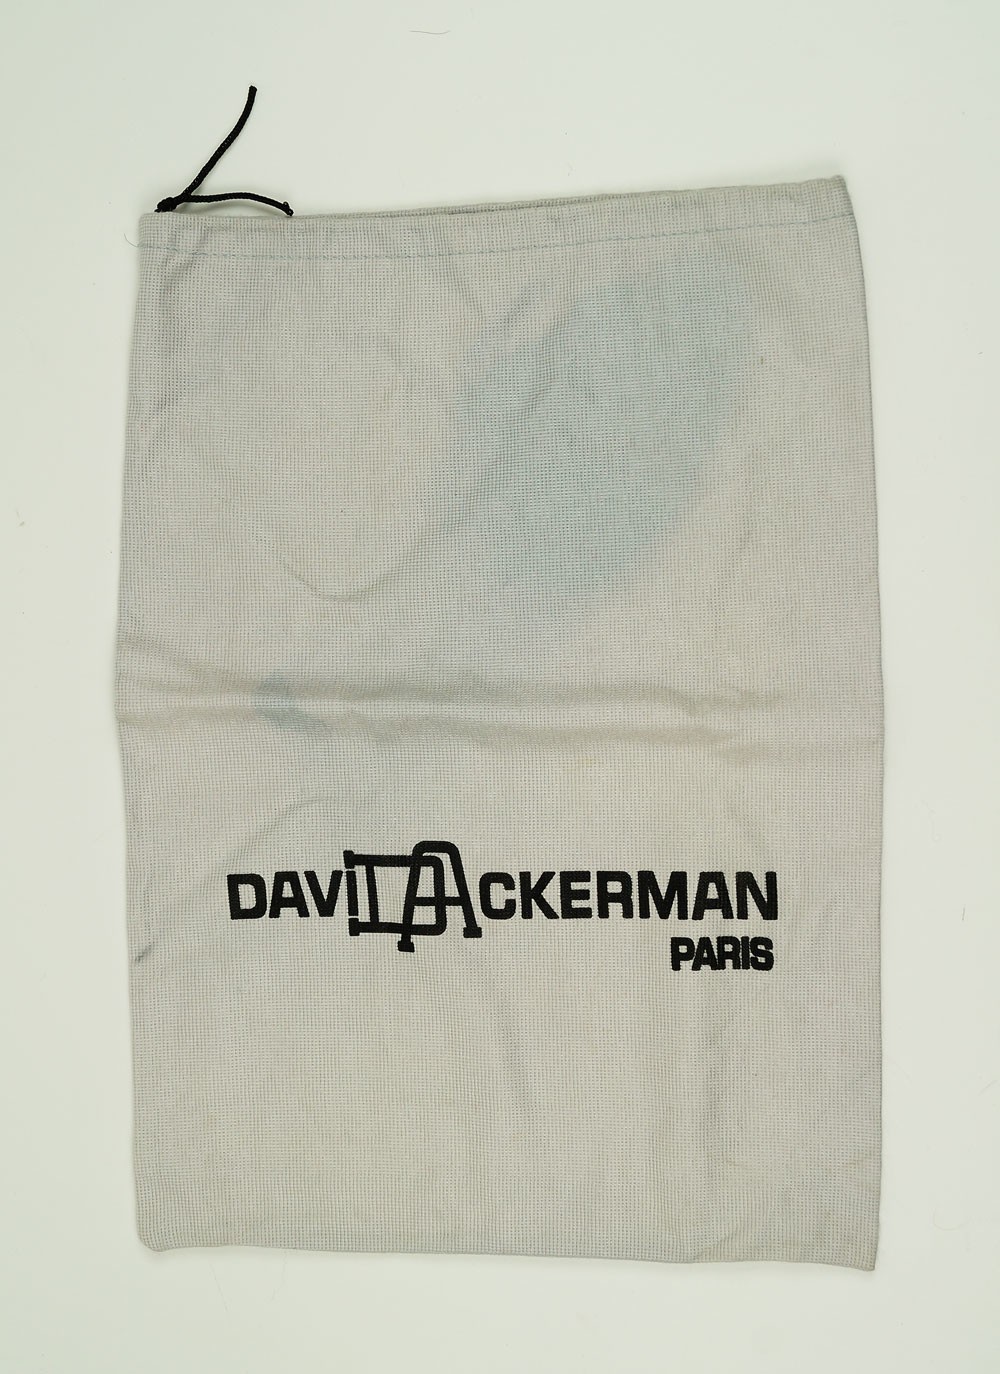 Schuhbeutel "DAVID ACKERMAN PARIS" (Museum Weißenfels CC BY-NC-SA)